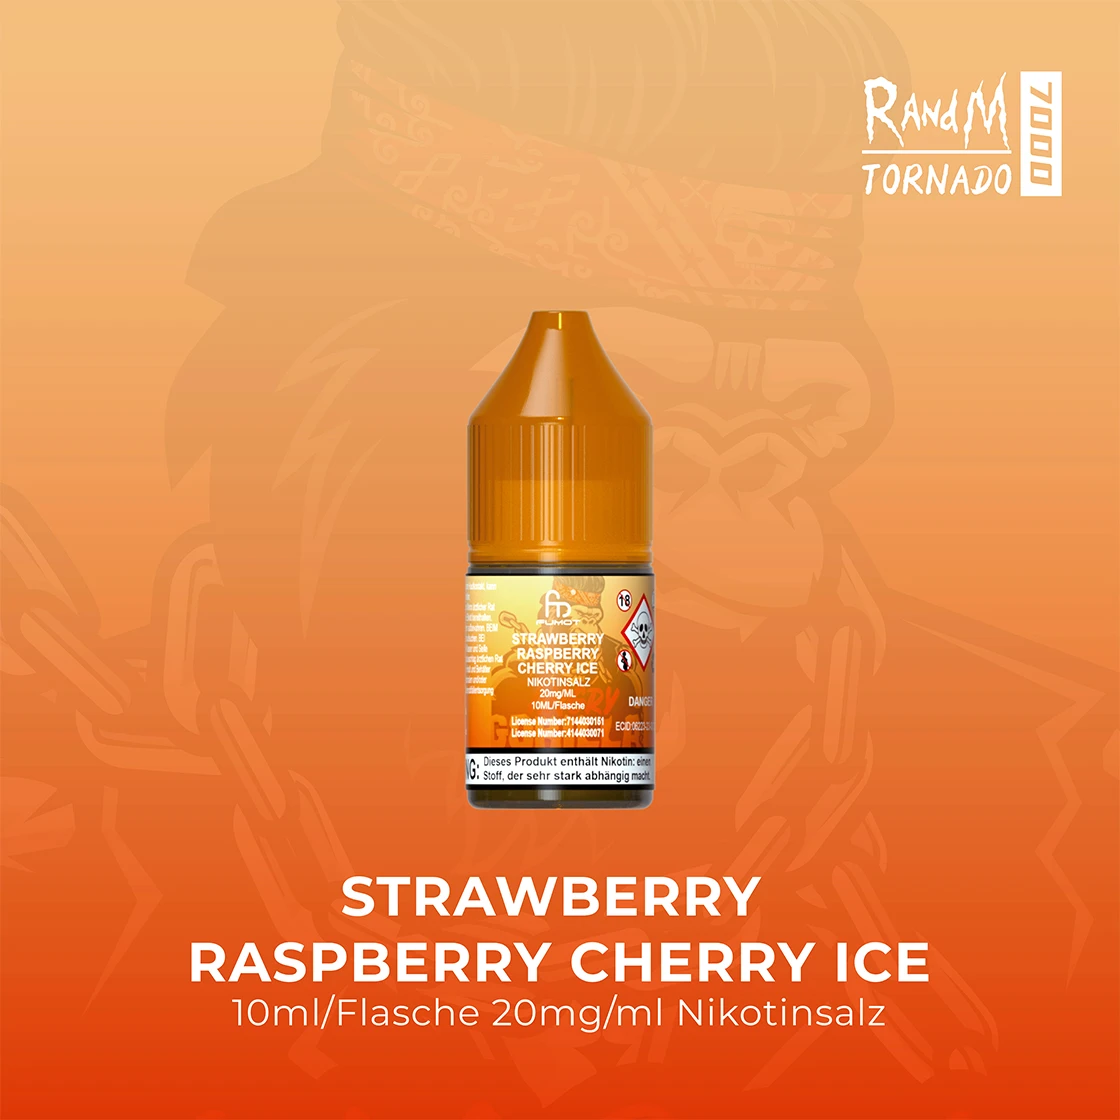 RandM Tornado 7000 Straw Rasp Cherry Ice E-Liquid Nikotinsalz 20 mg | Vape Liquids 1